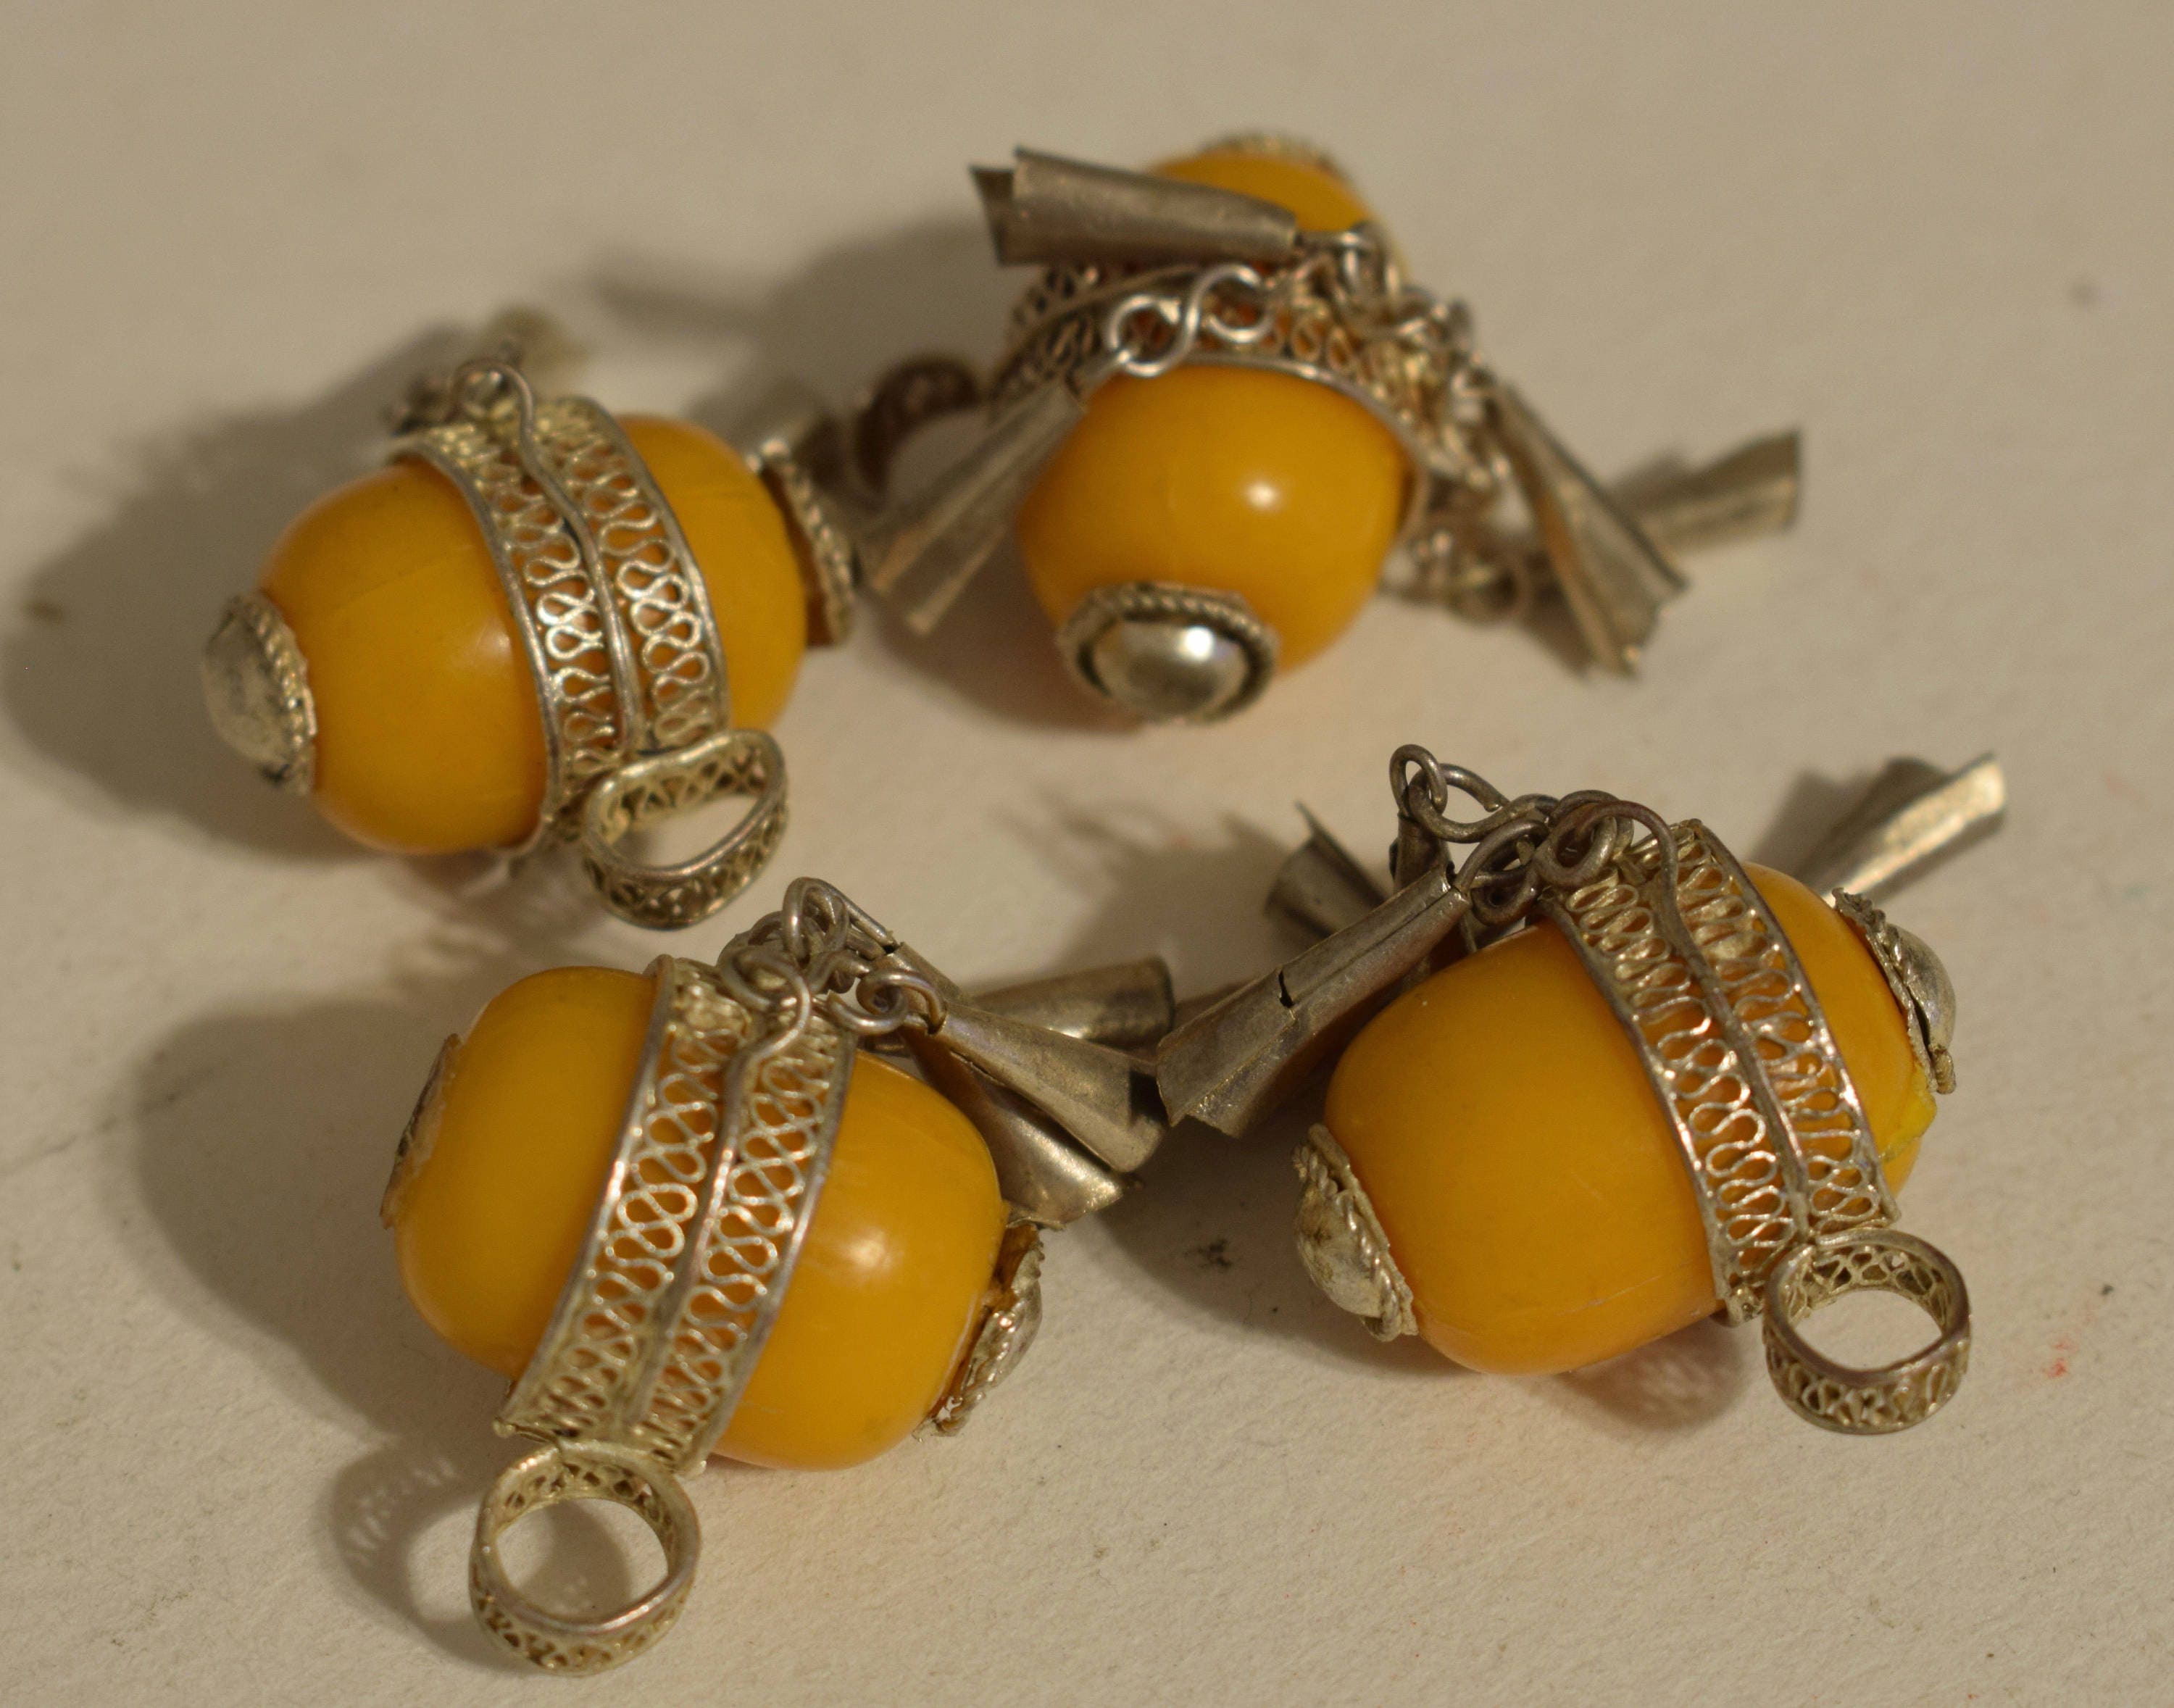 Amber Jewelry Resin Beads, Amber Jewelry Making